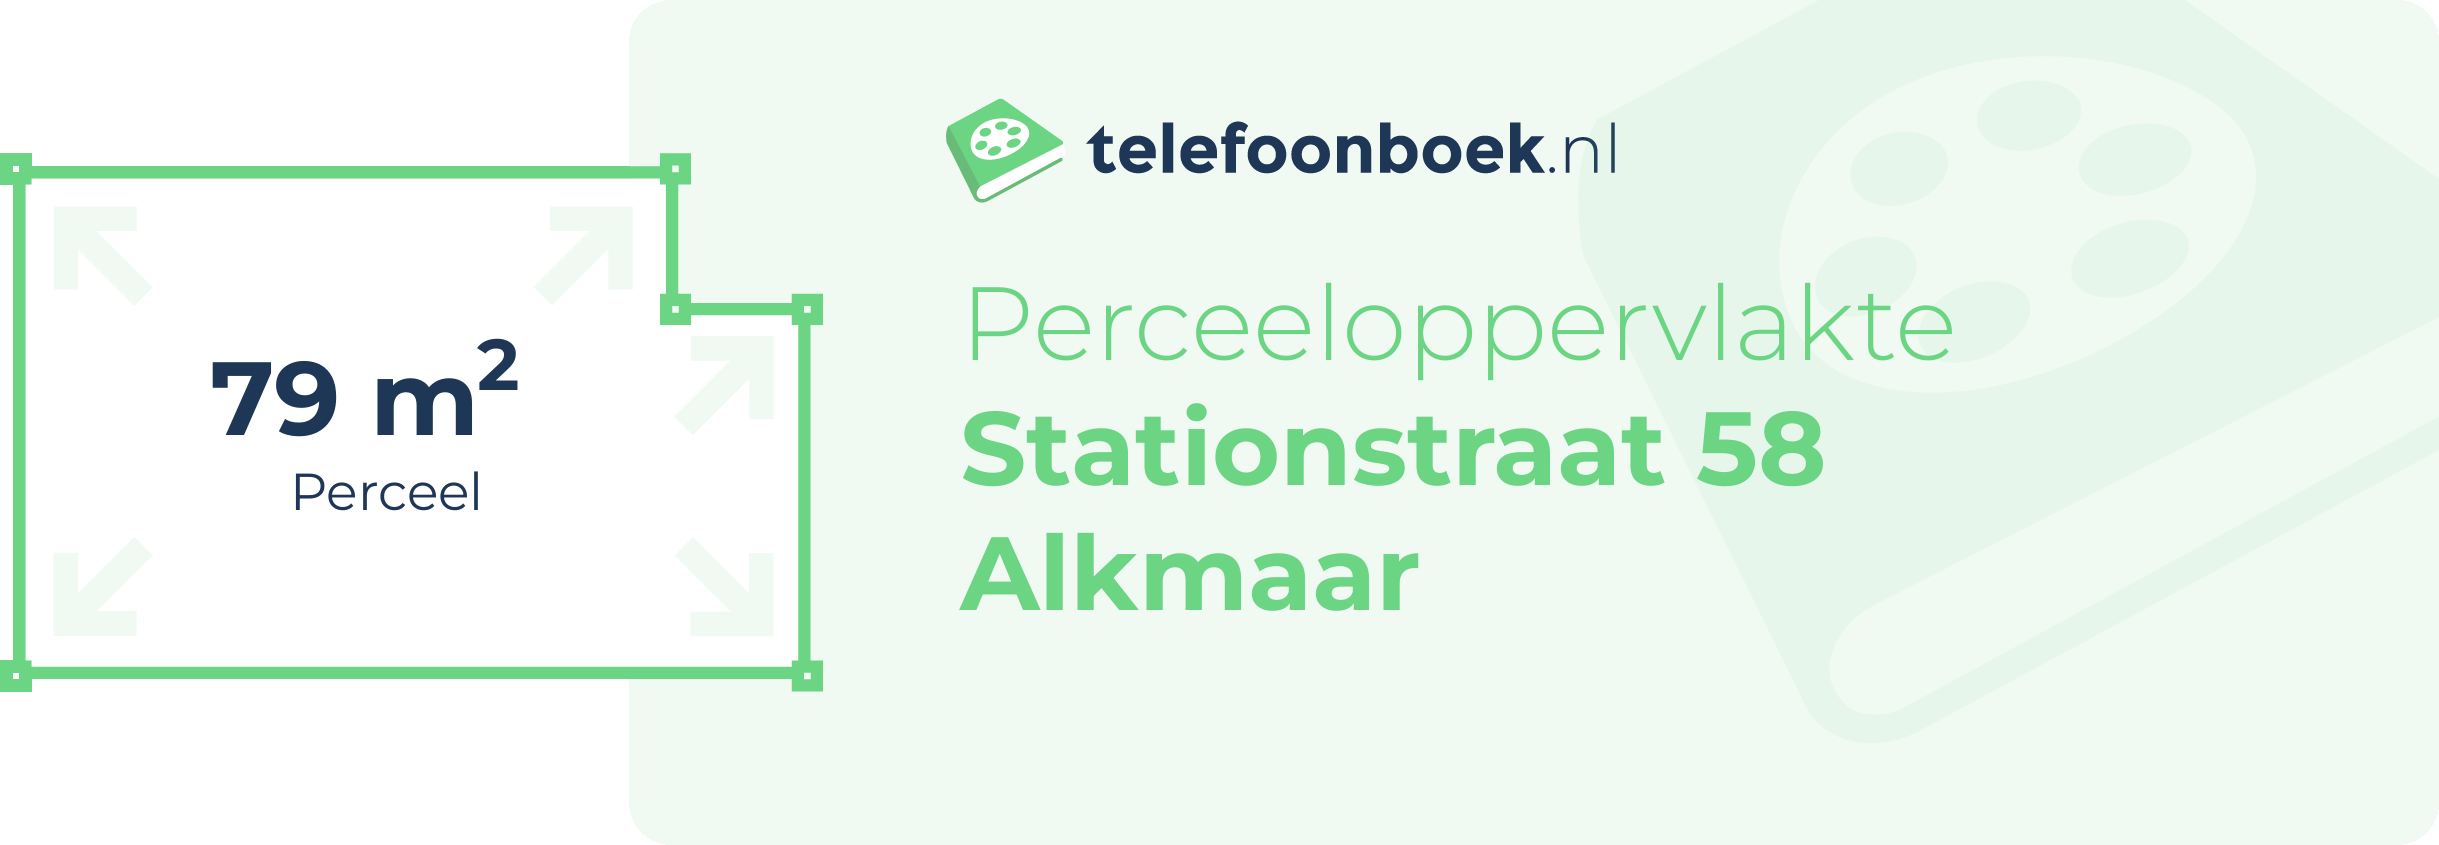 Perceeloppervlakte Stationstraat 58 Alkmaar